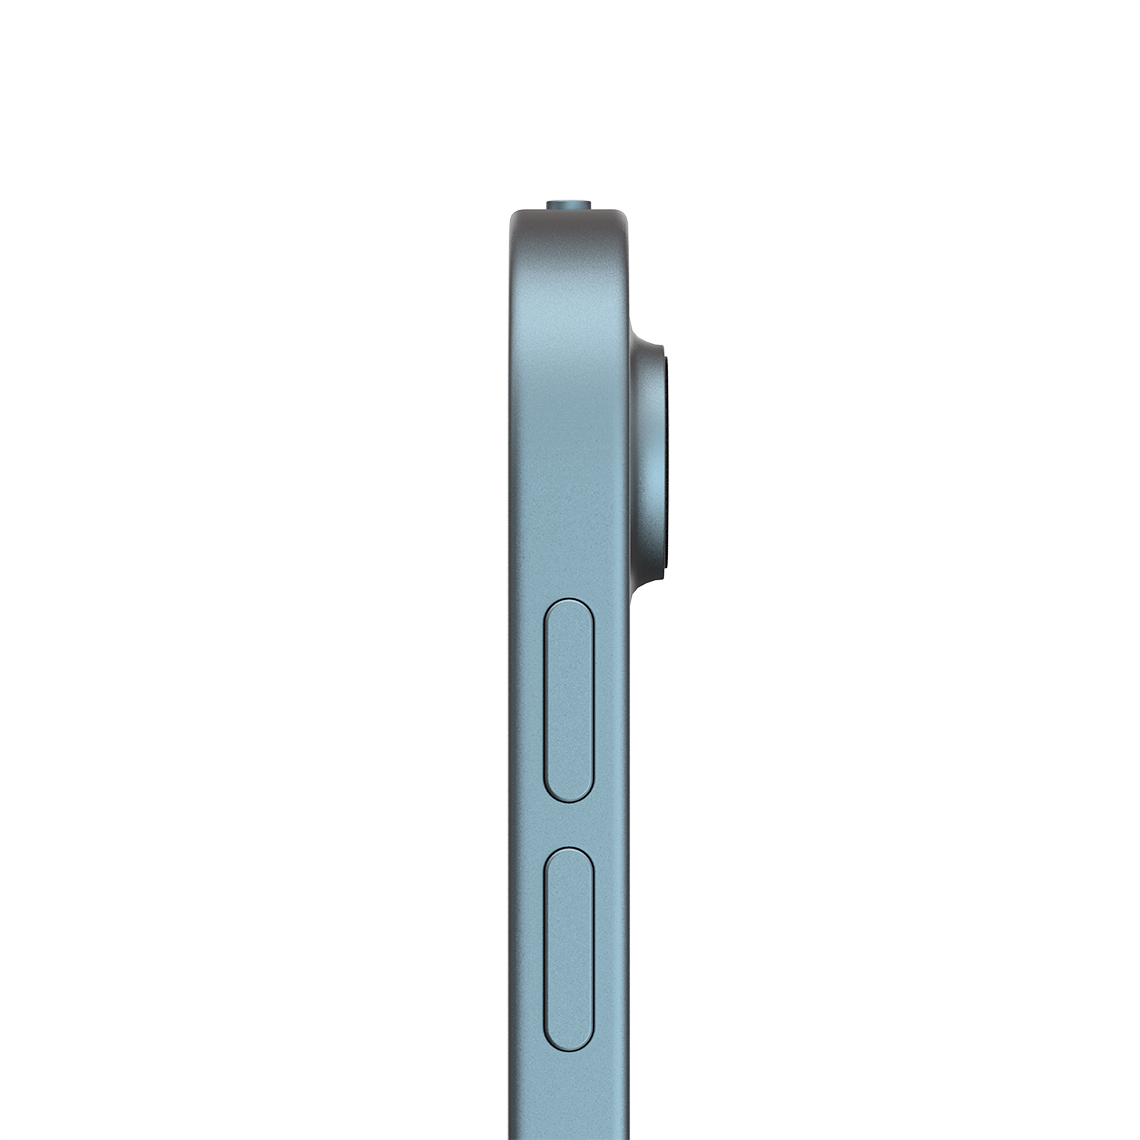 Apple iPad Air 10.9-inch 5th Generation - Blue - 64GB, Wi-Fi, Open Box